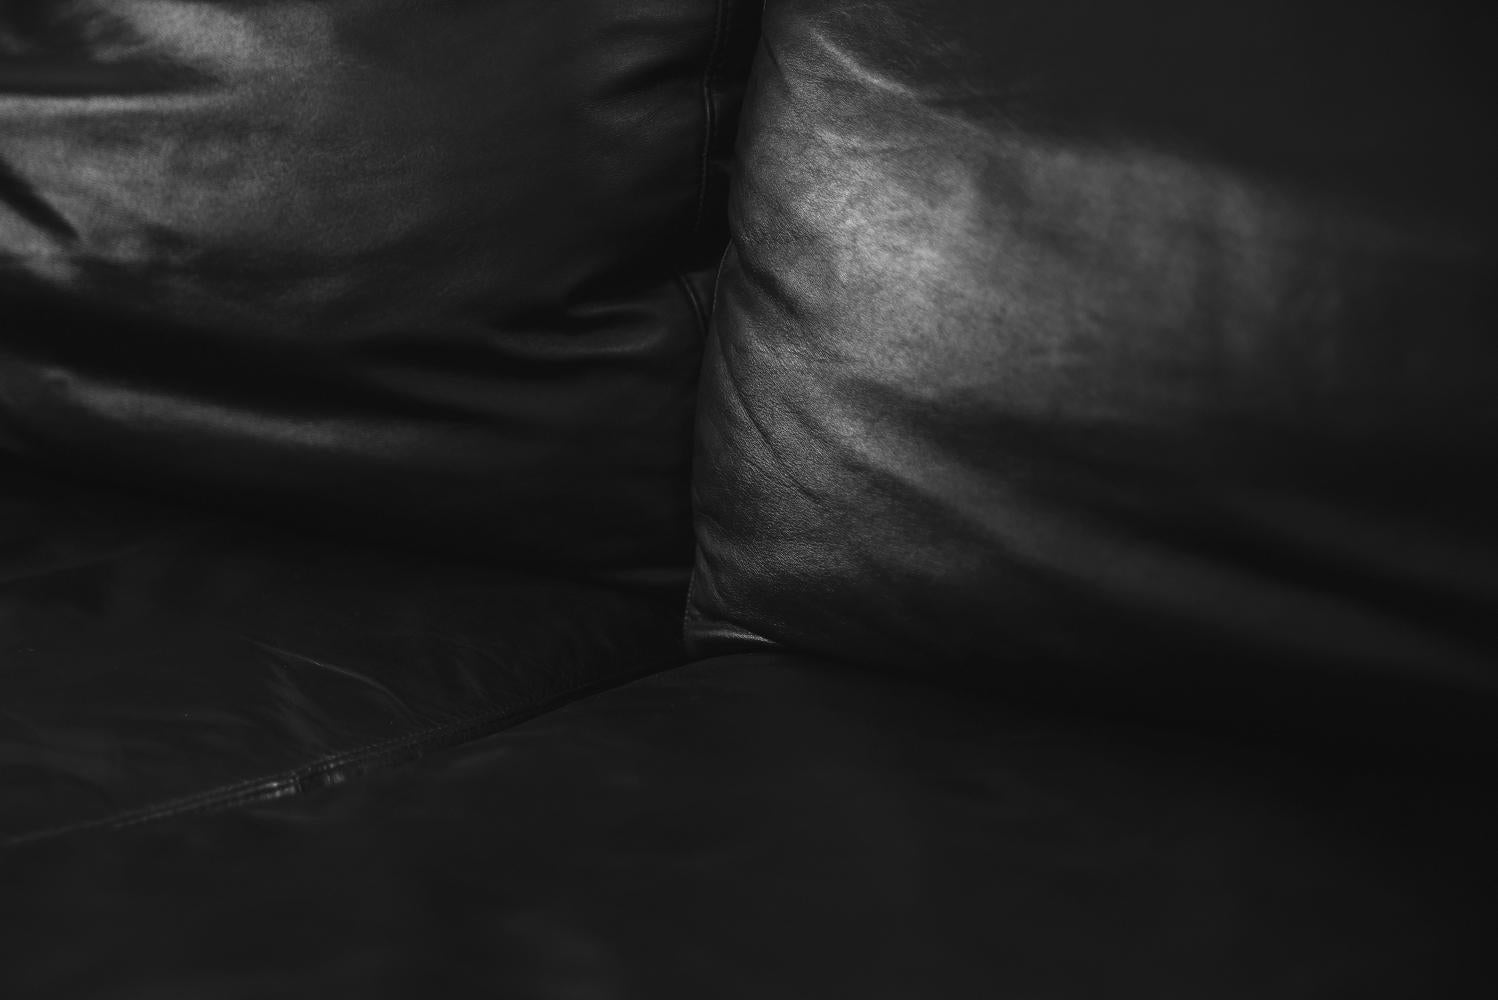 Modern Vintage Elegant Minimalist Black Leather Sofa by Natuzzi Design Center  For Sale